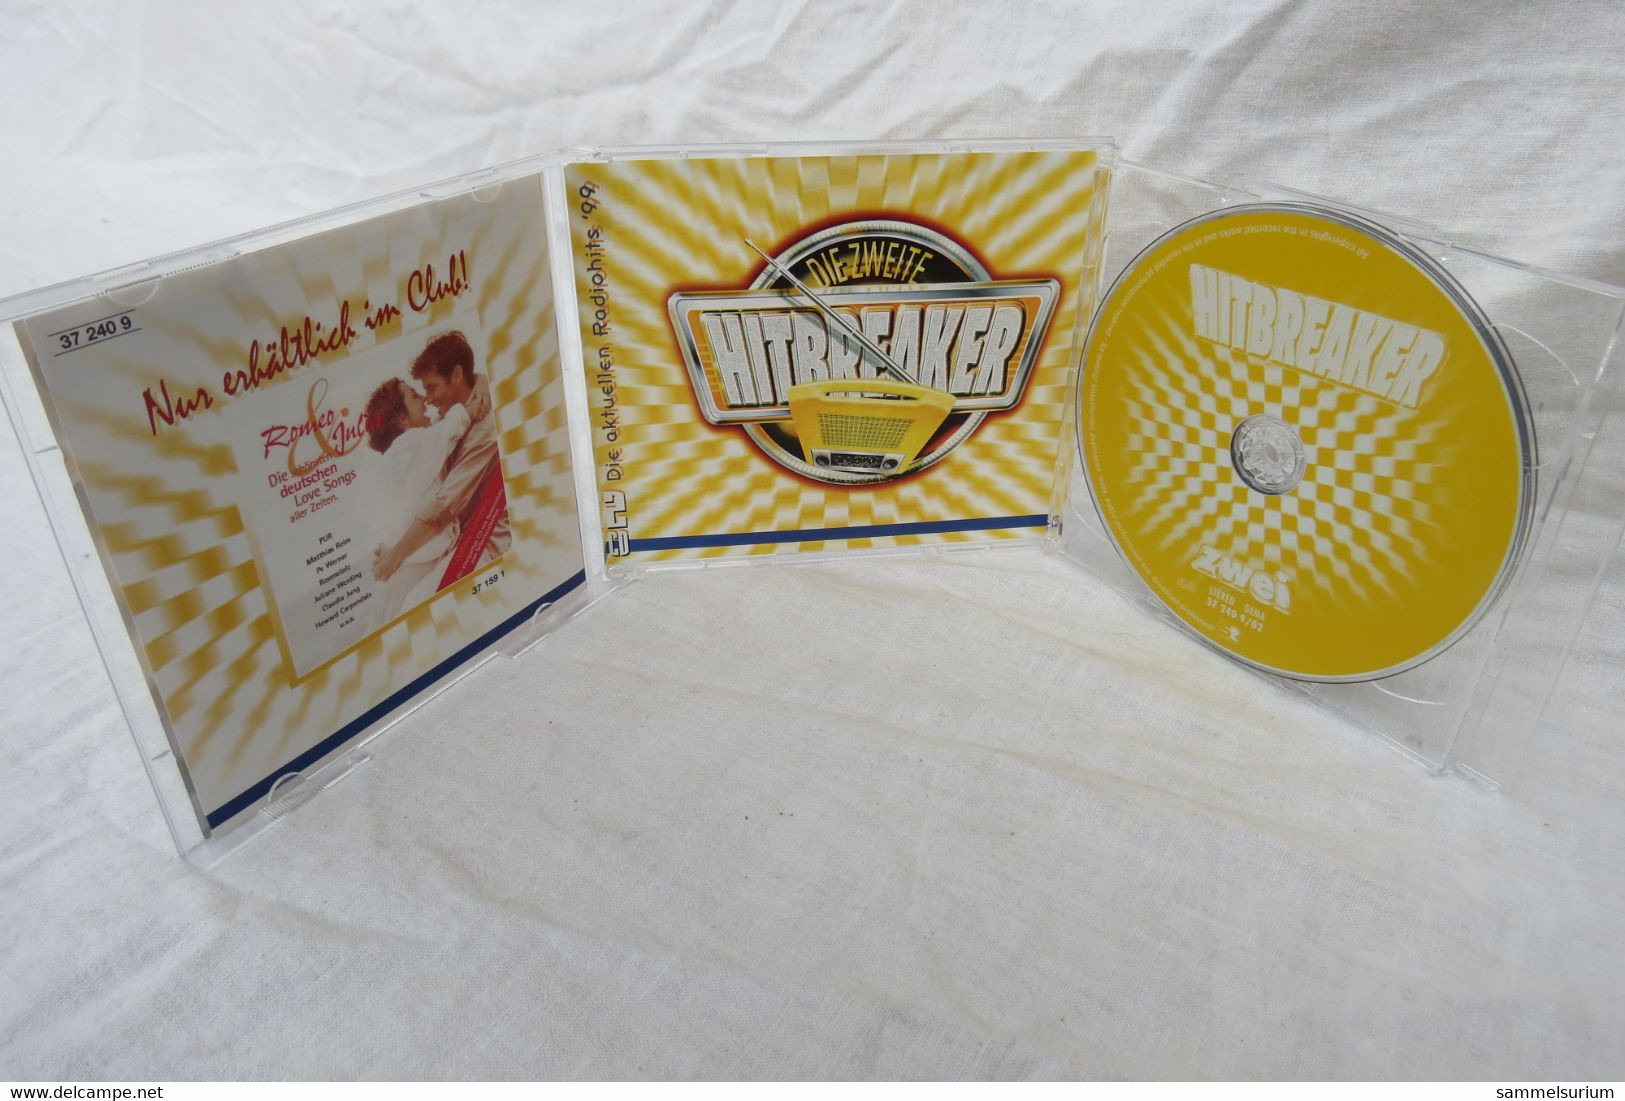 2 CDs "Die Zweite Hitbreaker" Die Aktuellen Radiohits '99 - Hit-Compilations